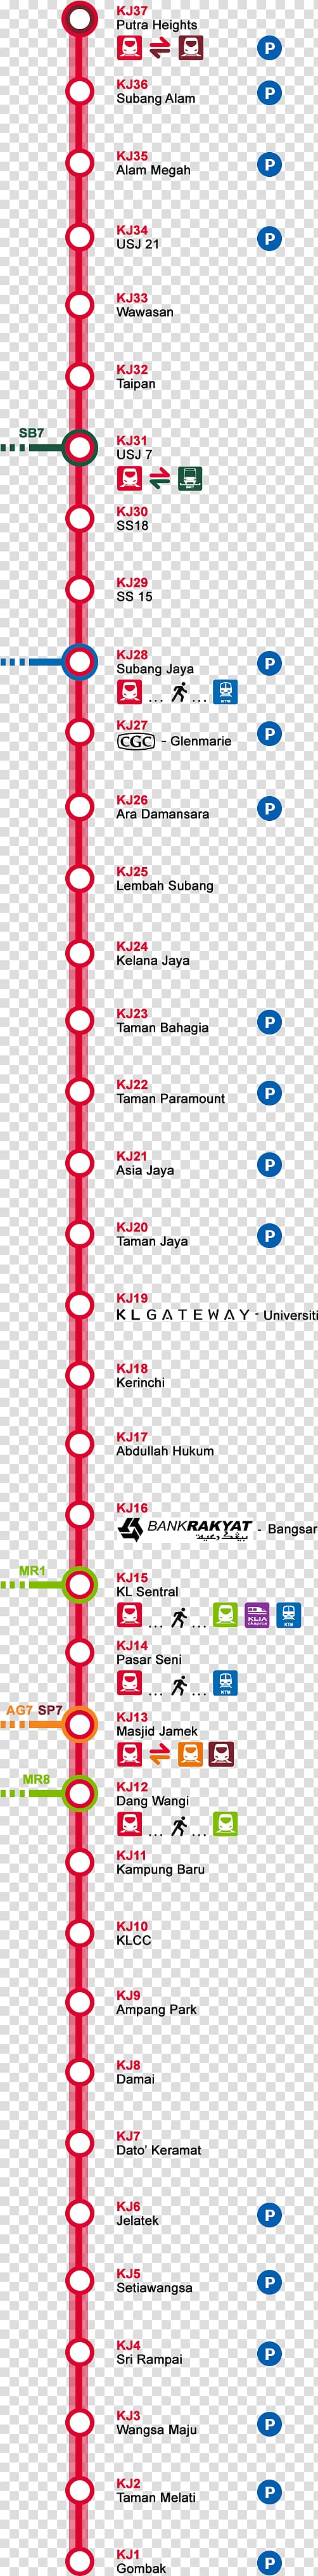 Kelana Jaya line Kuala Lumpur Sentral railway station Masjid Jamek LRT station Ampang and Sri Petaling lines, others transparent background PNG clipart